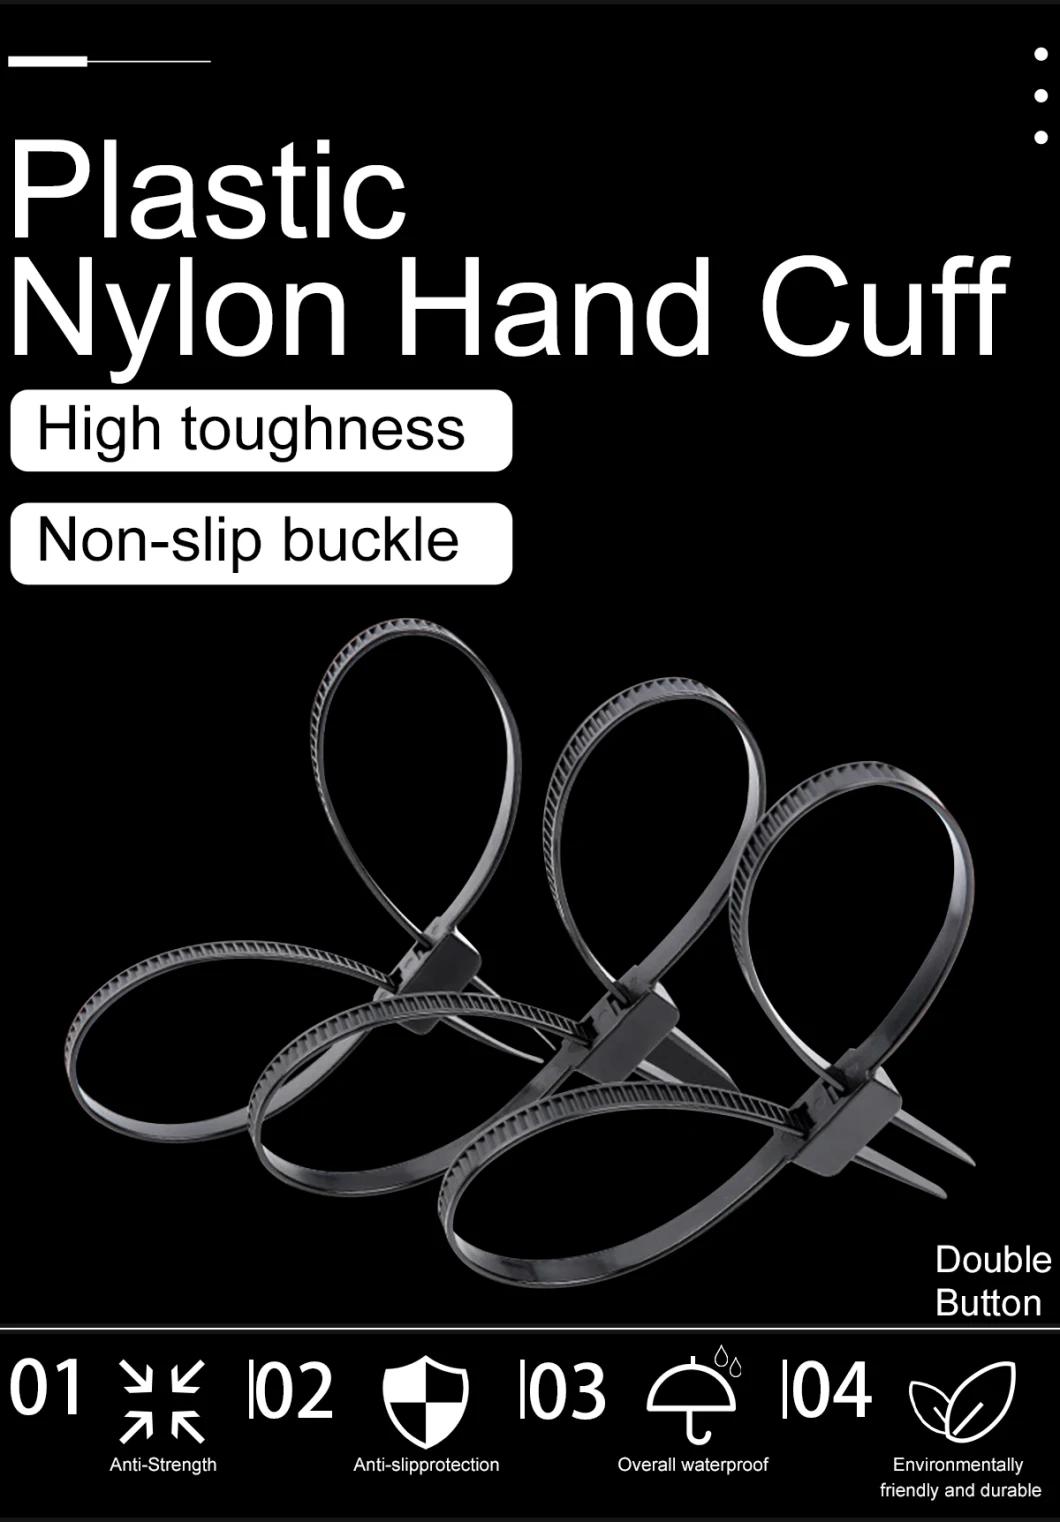 Manufacturer 13*880 Black Nylon Strap Plastic Handcuff Cable Ties